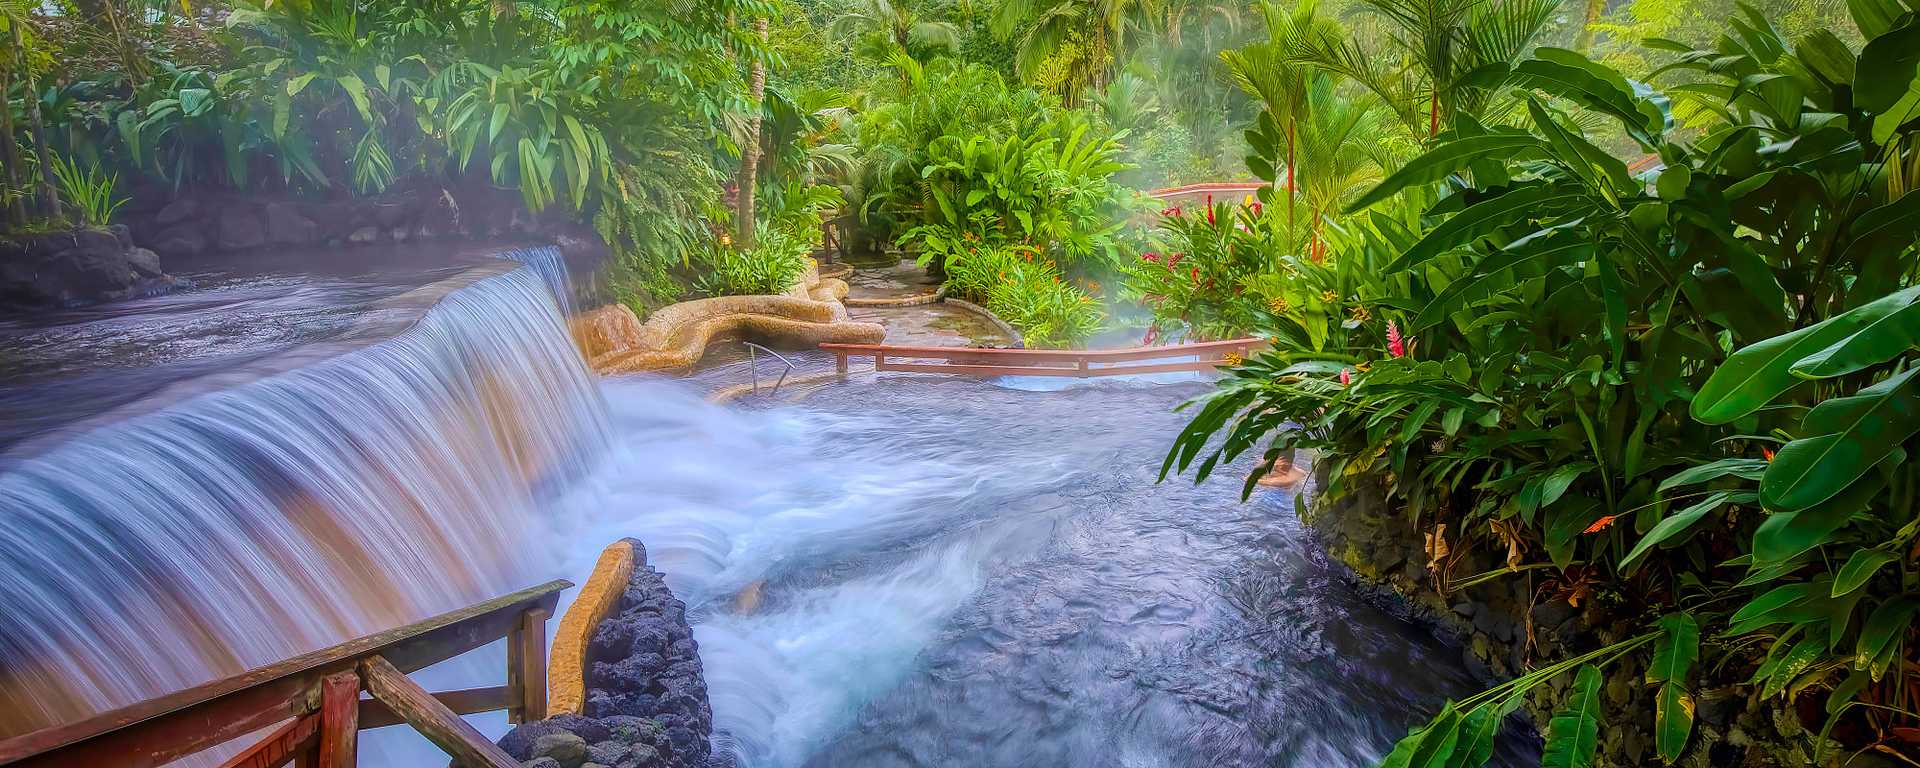 Thermal hot springs in Costa Rica